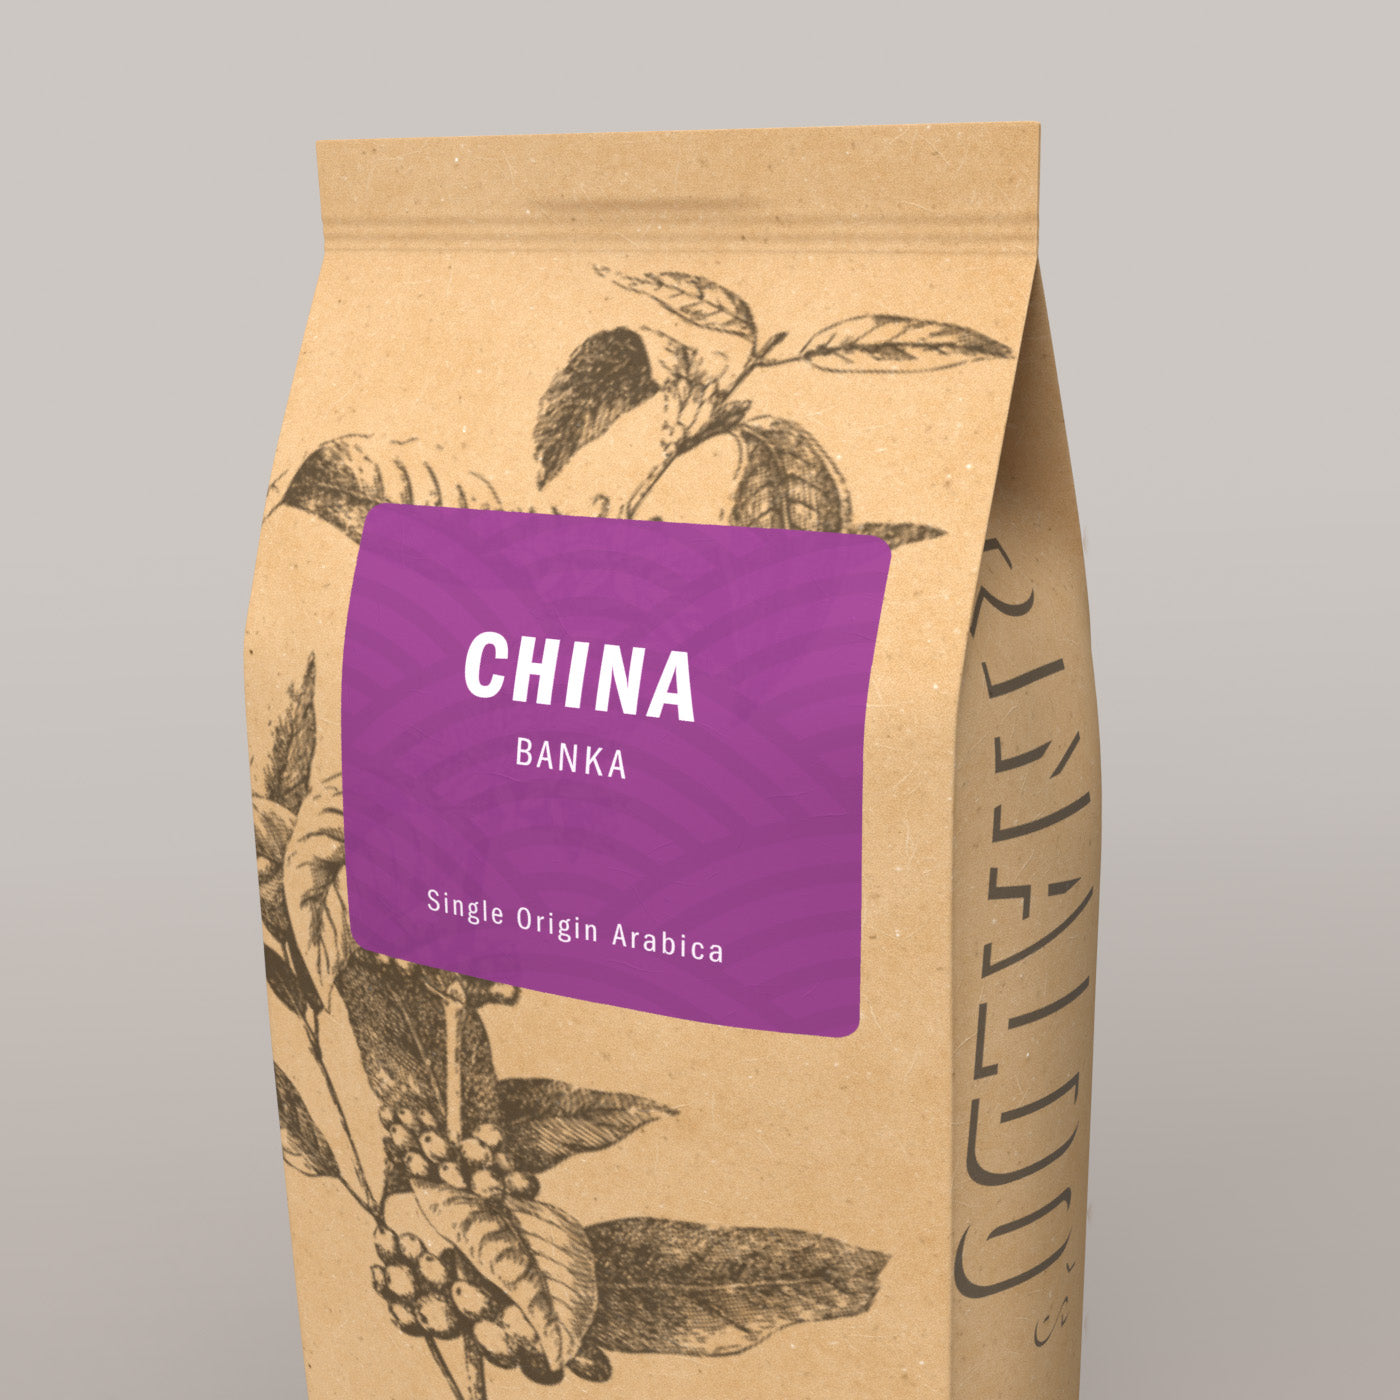 China: Banka Coffee - Single Origin - 100% Arabica